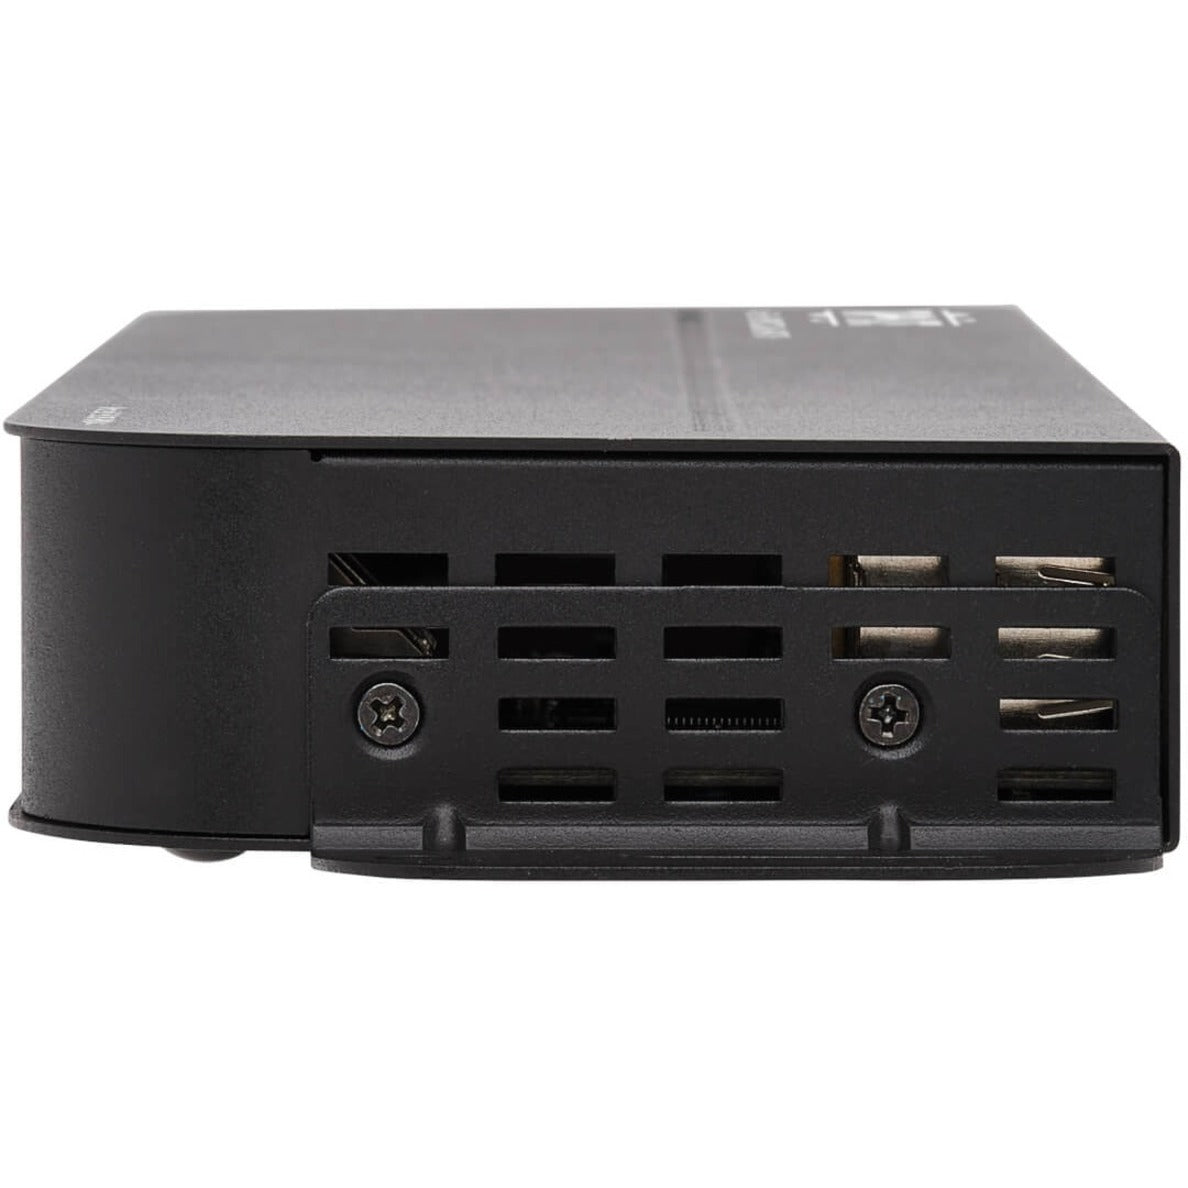 Tripp Lite B005-HUA4 4-Port HDMI/USB KVM Switch, 4096 x 2160 Resolution, 3-Year Warranty